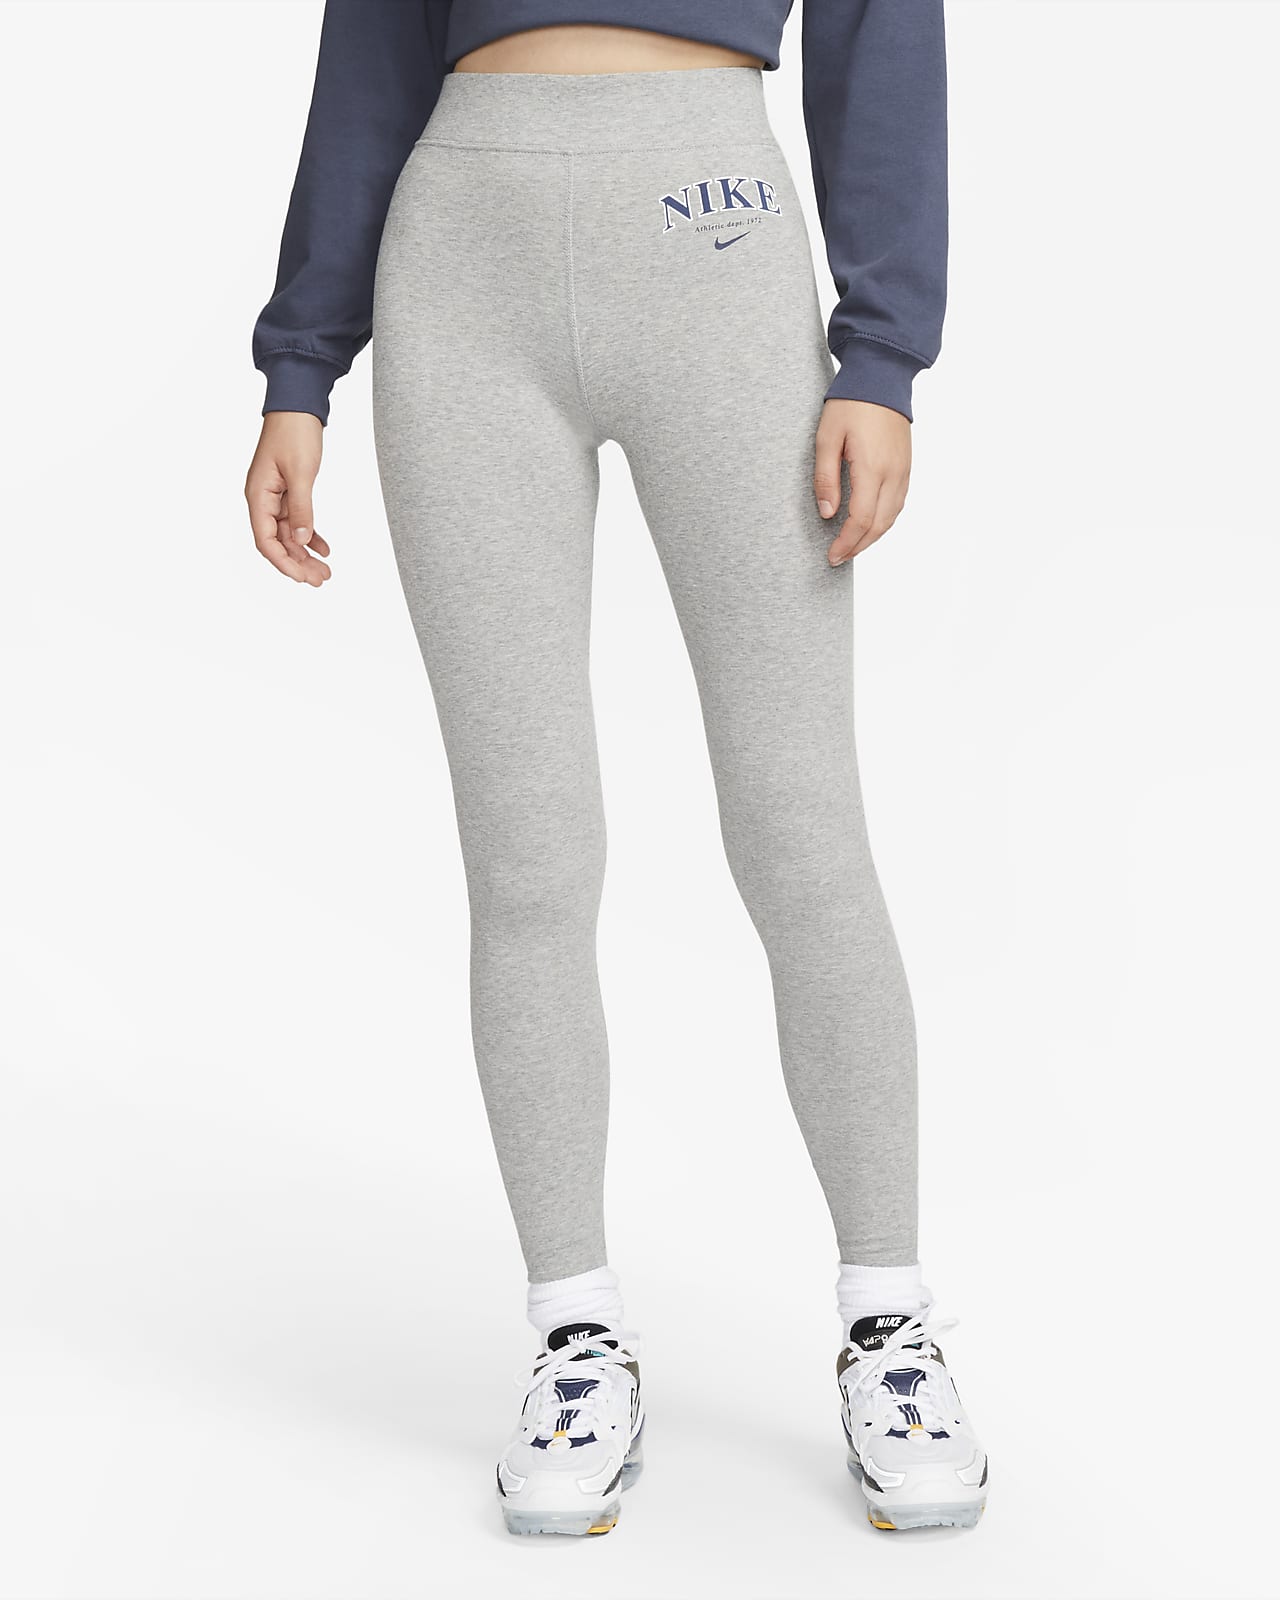 Nike Sportswear Damen-Leggings mit hohem Bund